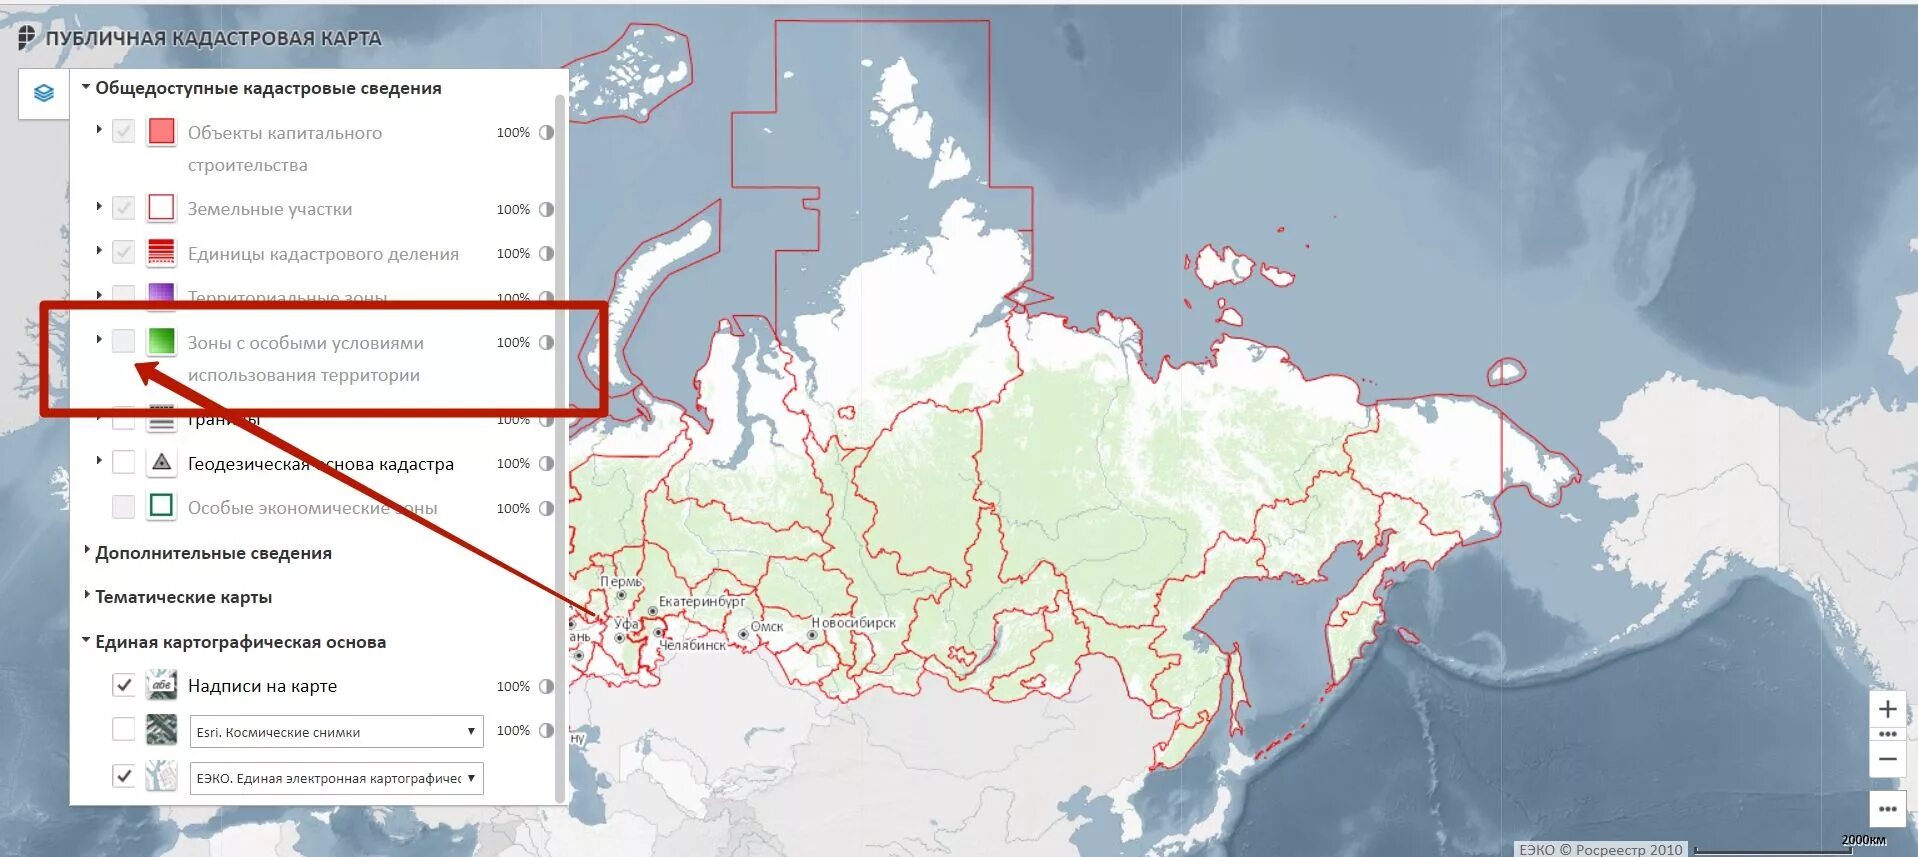 Кадастровая карта особые зоны. Охранные зоны на кадастровой карте. ЛЭП на кадастровой карте. Публичная кадастровая карта Владивостока. Росреестр публичная кадастровая карта водоохранные зоны.